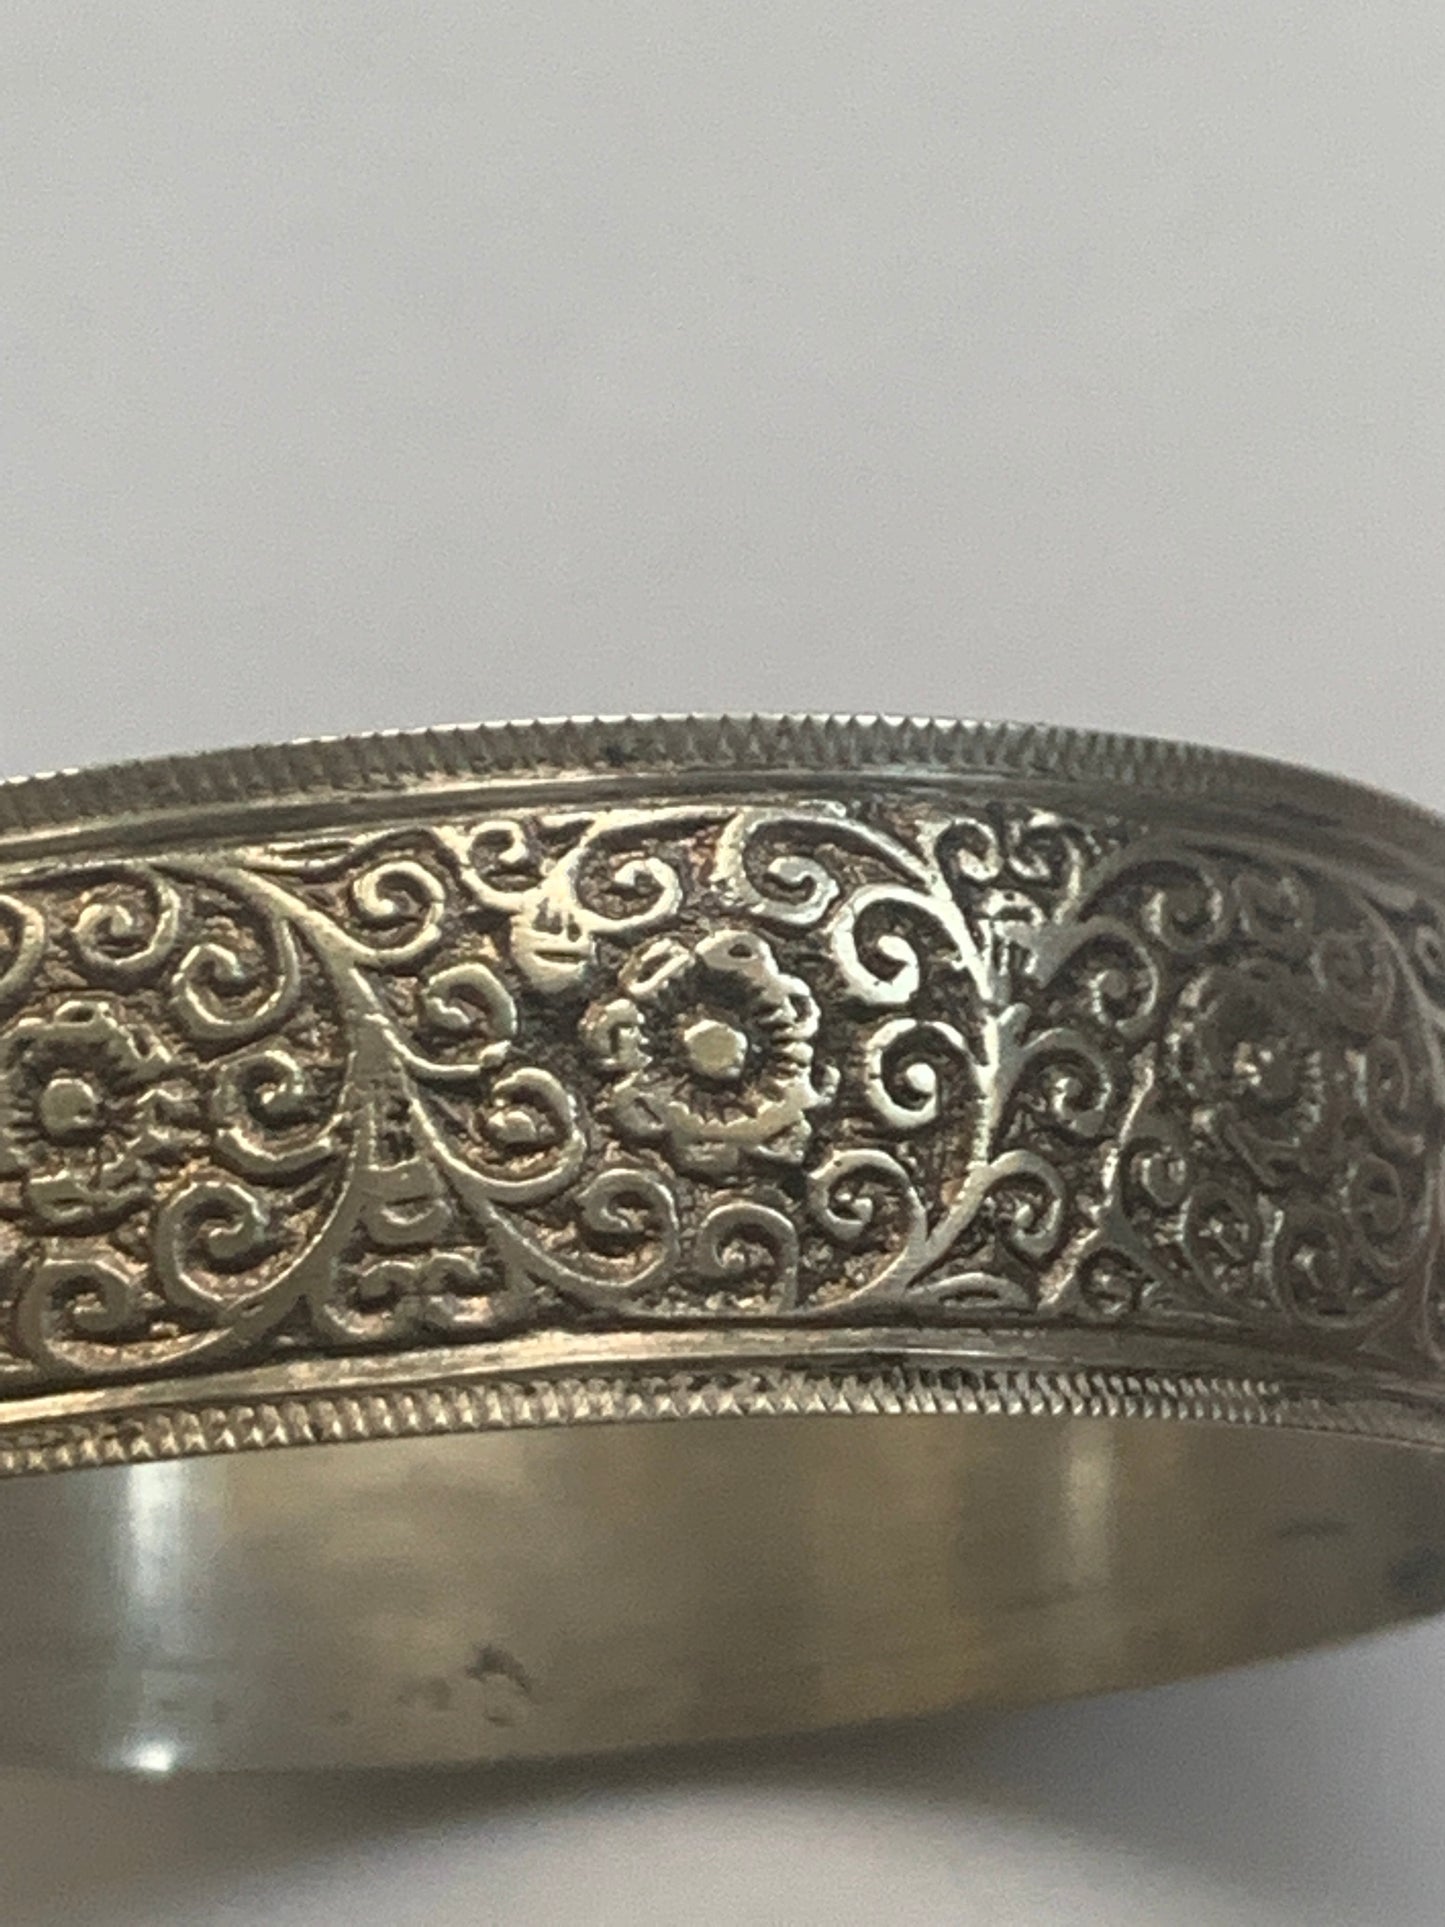 Essaouiran Antique Bangle Bracelet